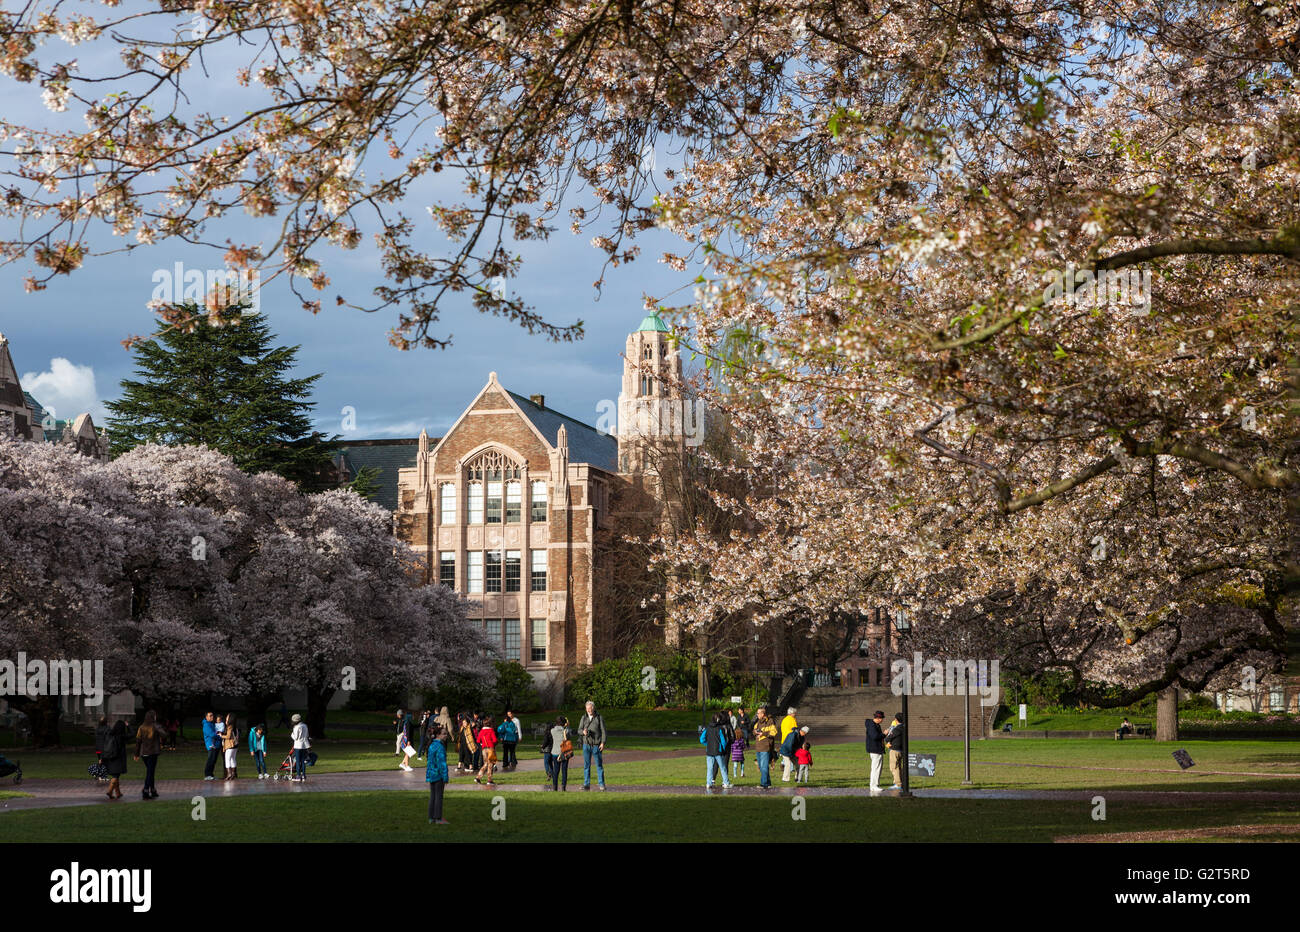 WA11680-00...WASHINGTON - Cherry trees in bloom at the University Of Washington in Seattle. Stock Photo